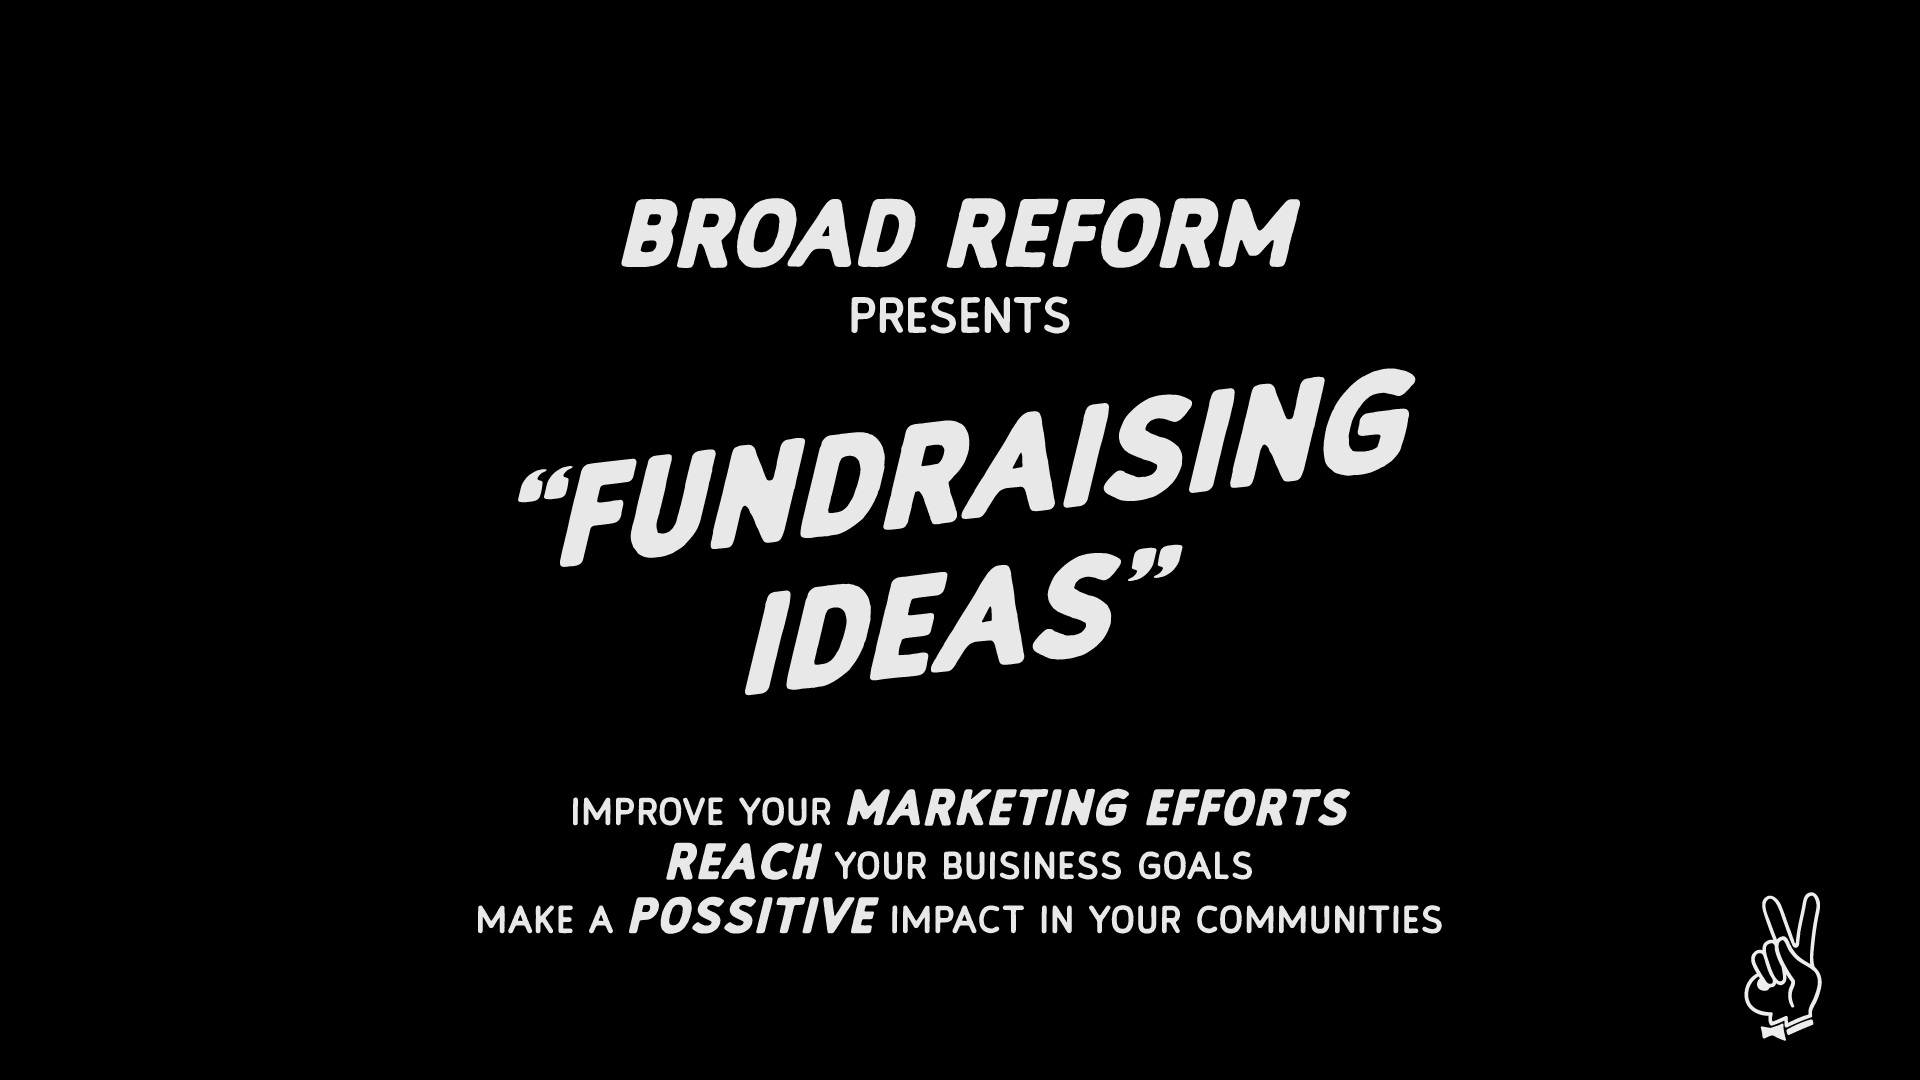 eofy fundraising ideas